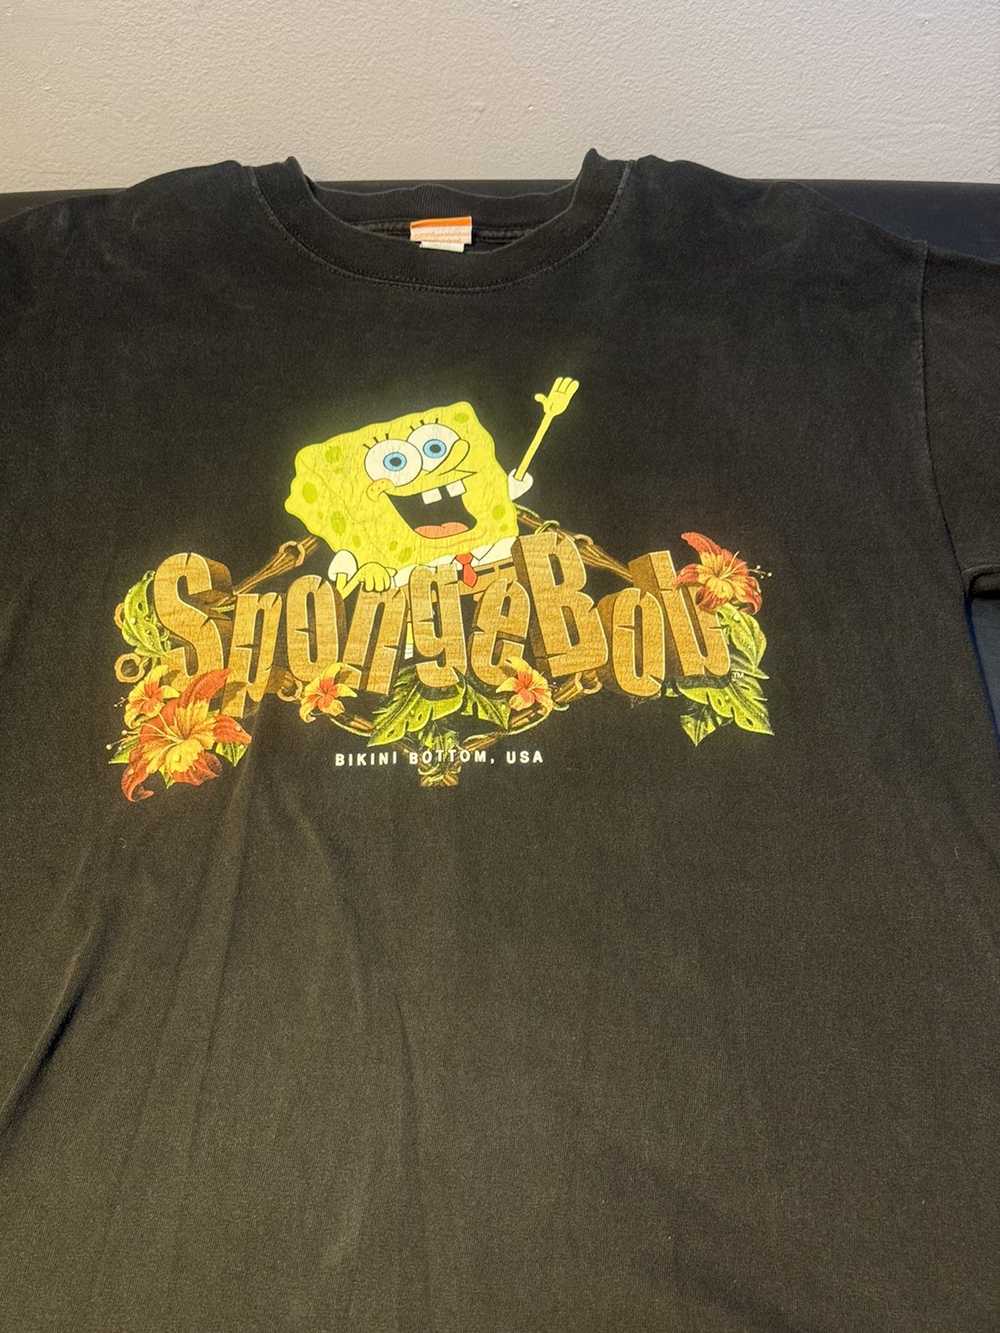 Vintage 2002 SpongeBob SquarePants vintage shirt - image 2